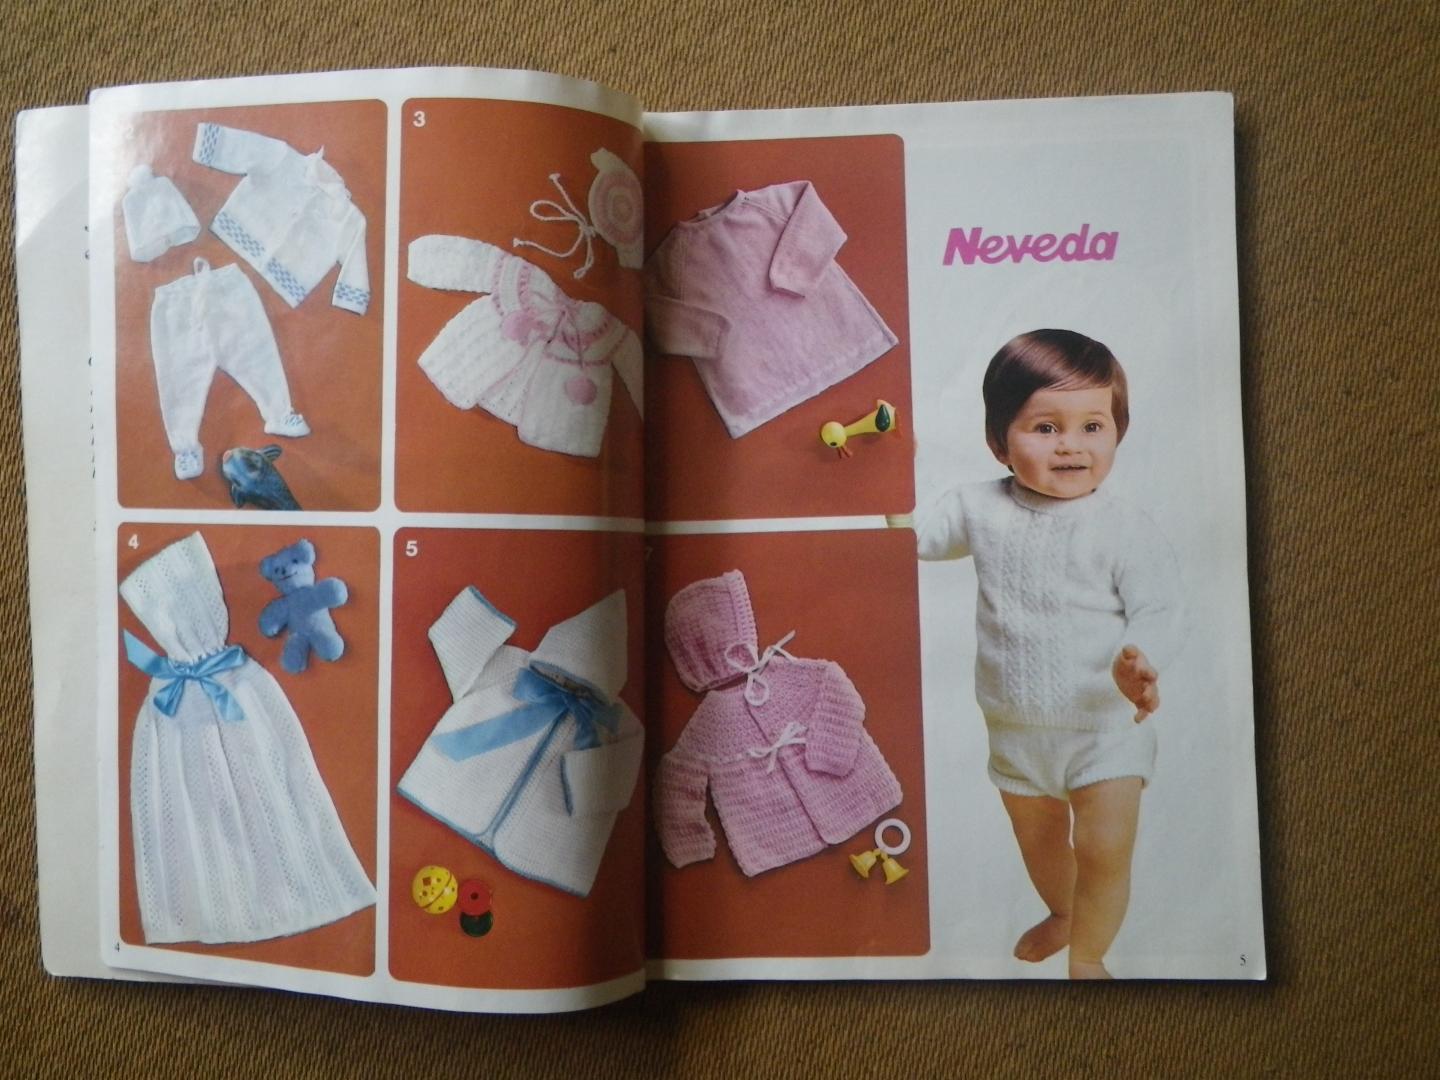 Nevada - Baby mode Nevada (brei boek jaren 60 - 70)